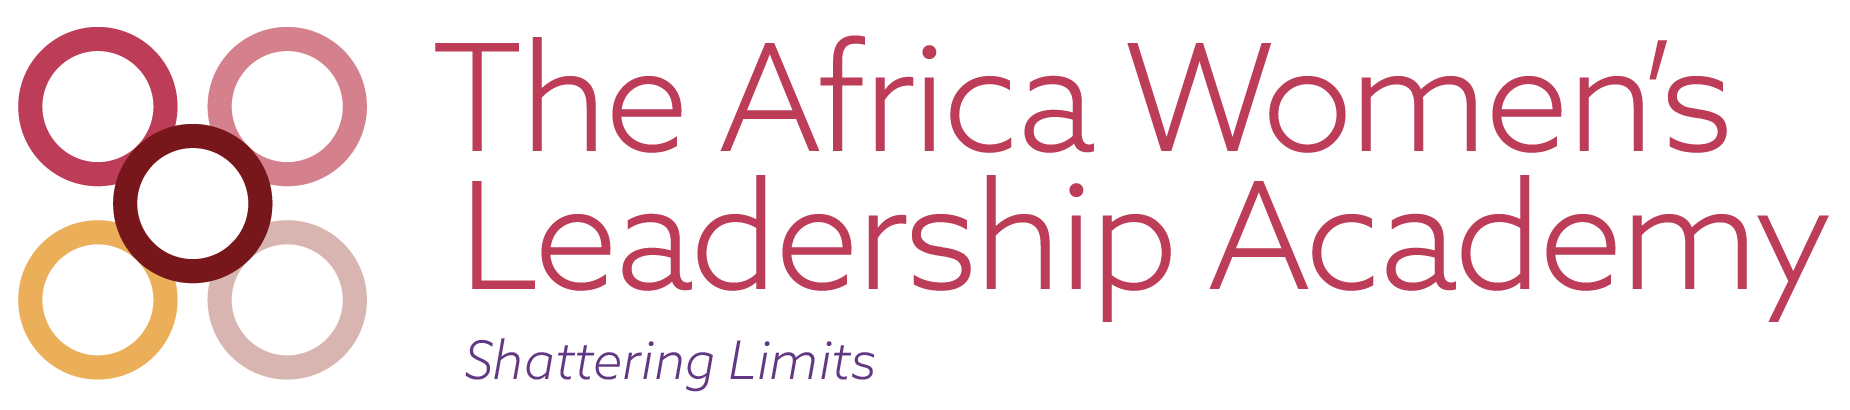 The Africa Women's Leadership Academy